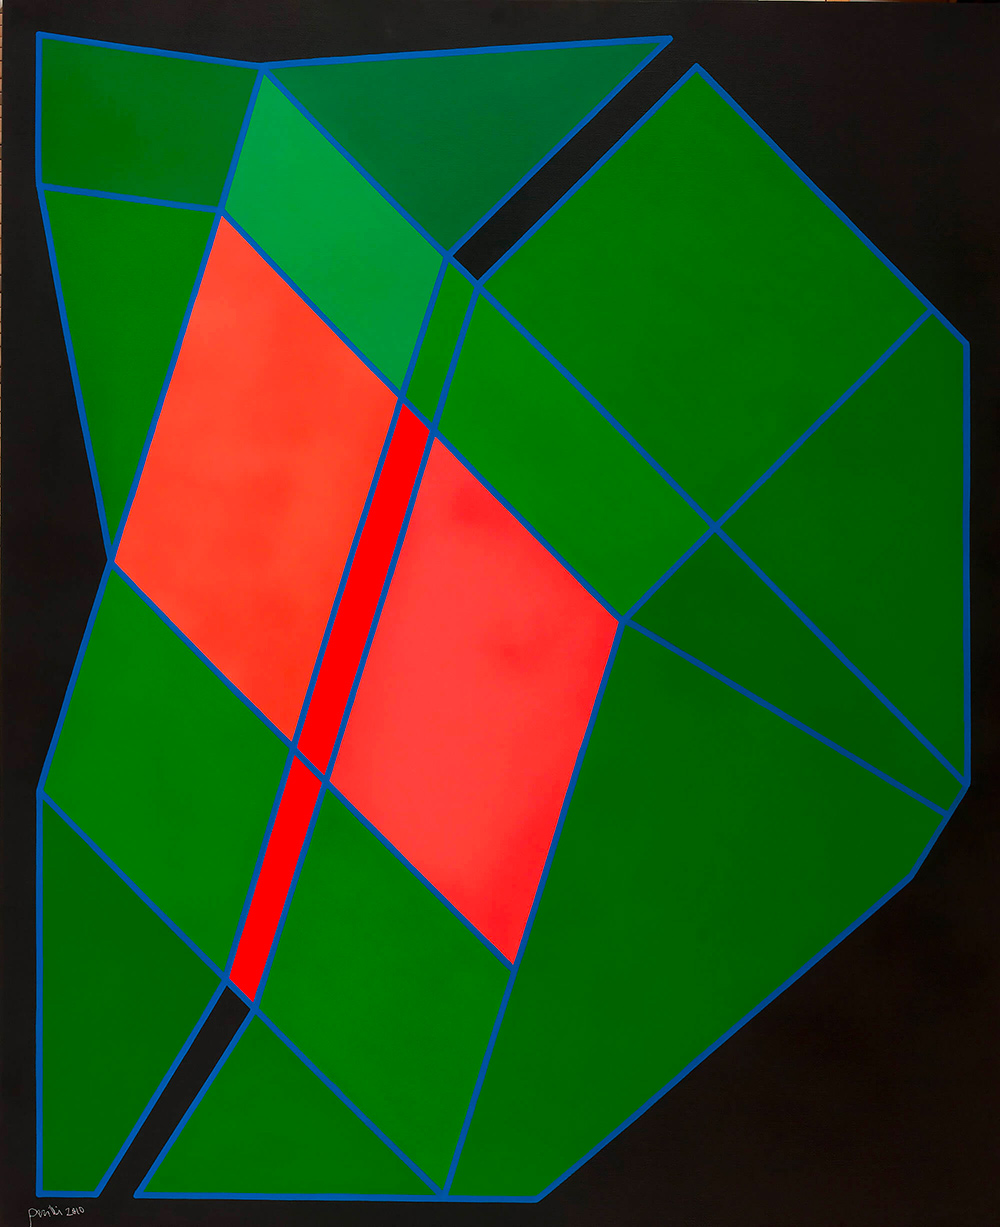 Il viaggio difficile, 2010, tecnica mista su tela, 100x81 cm, ph Riccardo De Antonis